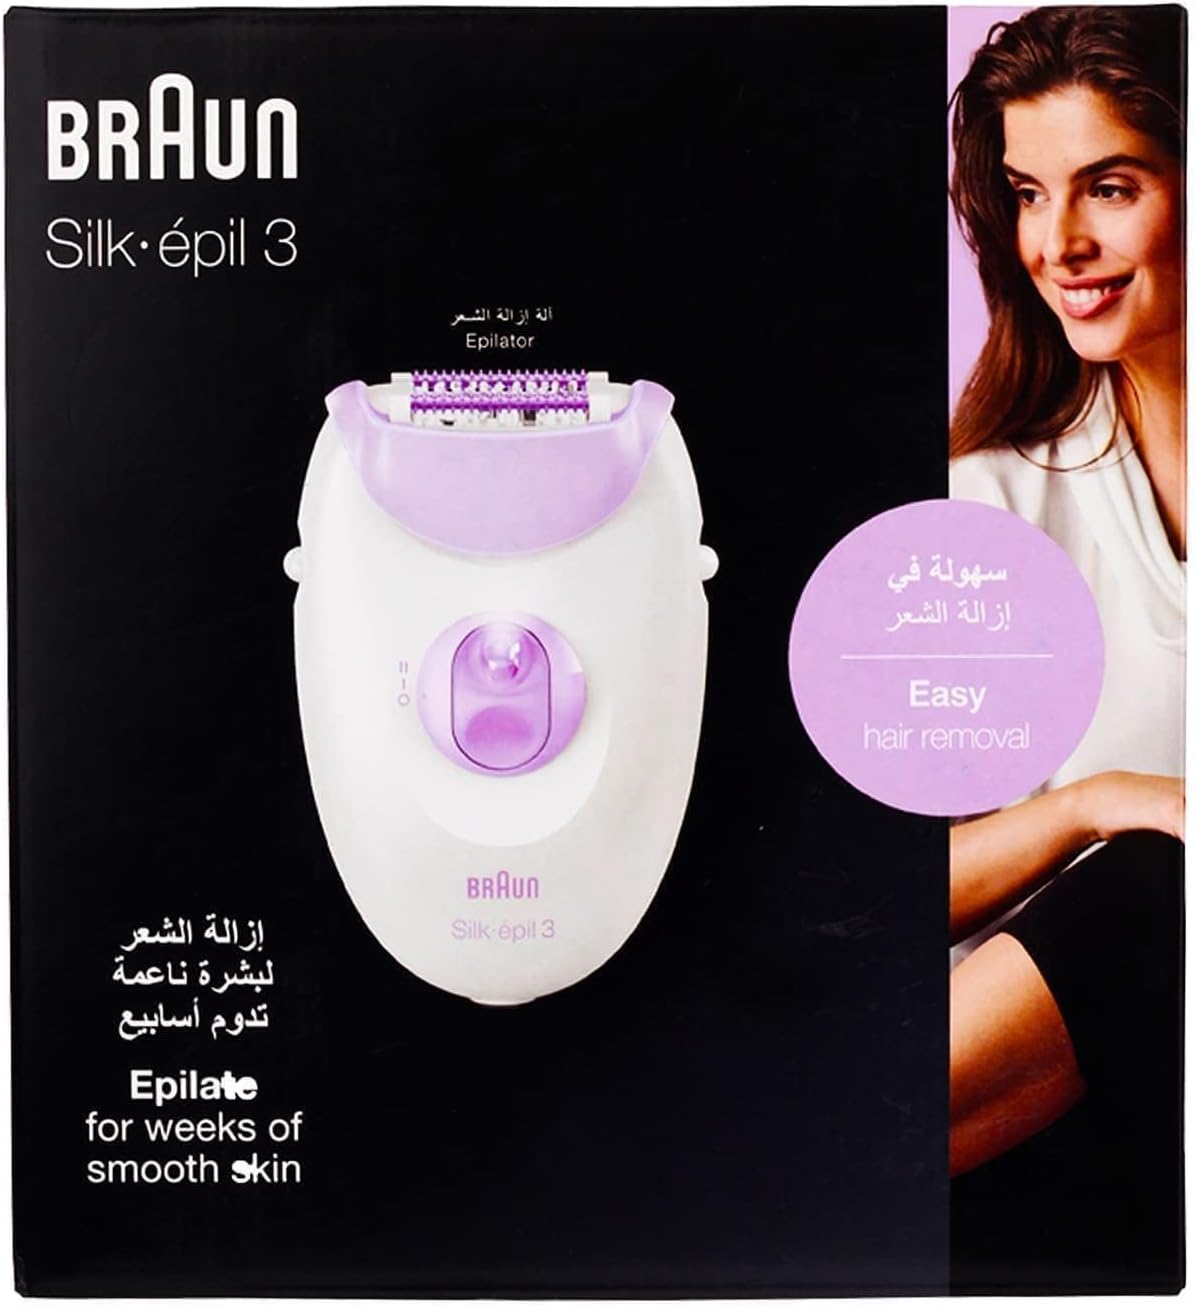 Braun Silk epil 3 - SE3-170 Legs Epilator with Massage Cap